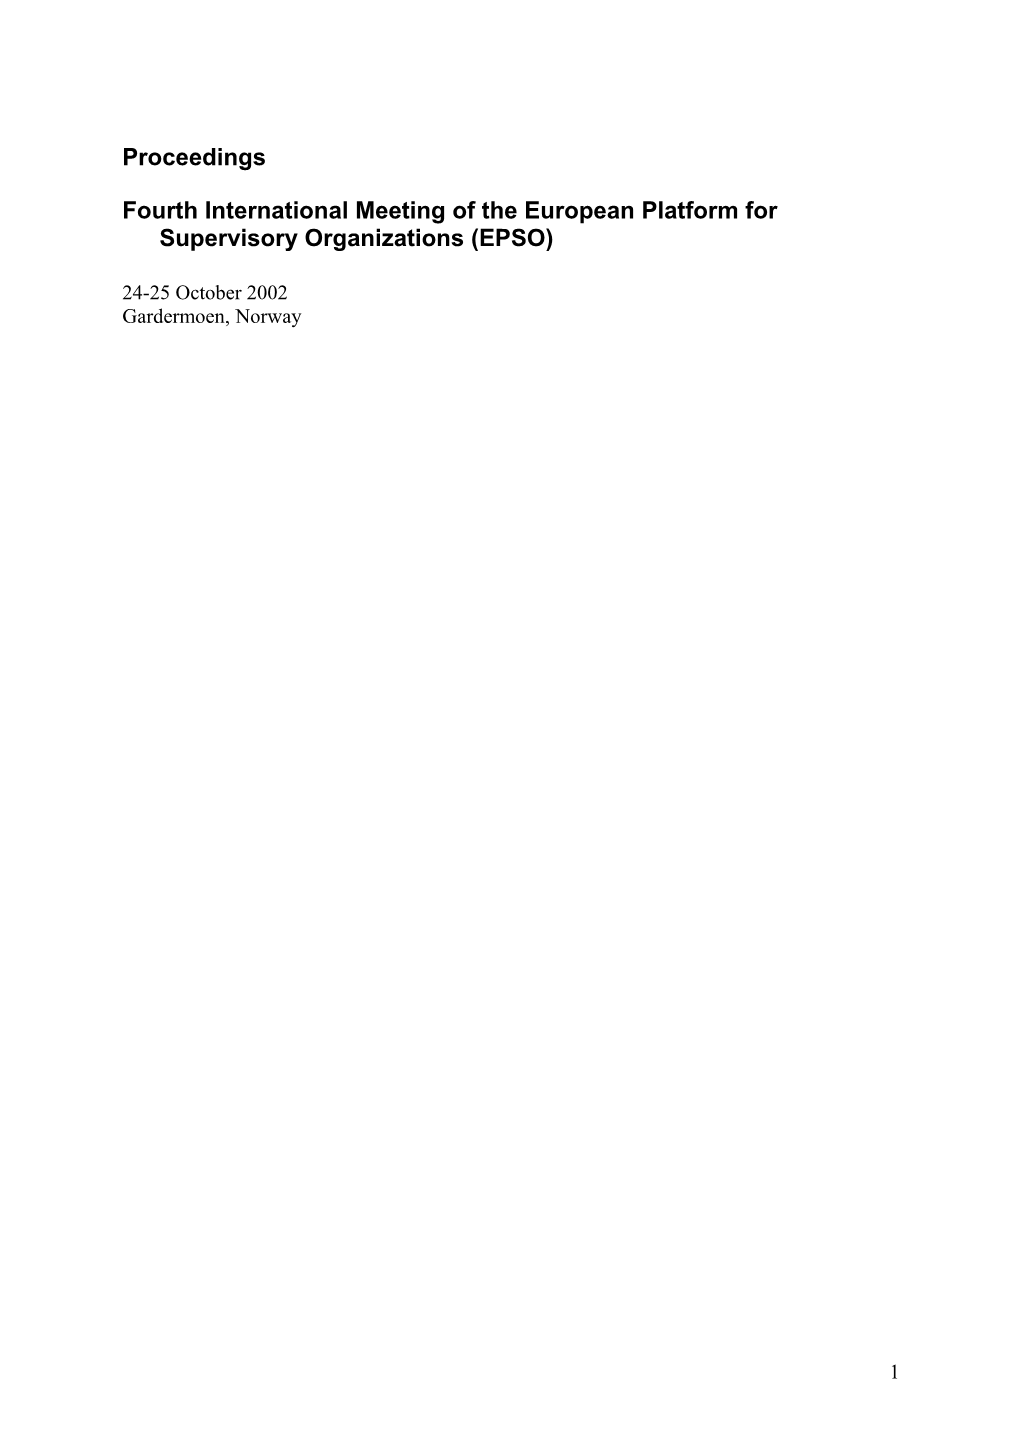 European Platform for Supervisory Organisations (EPSO)